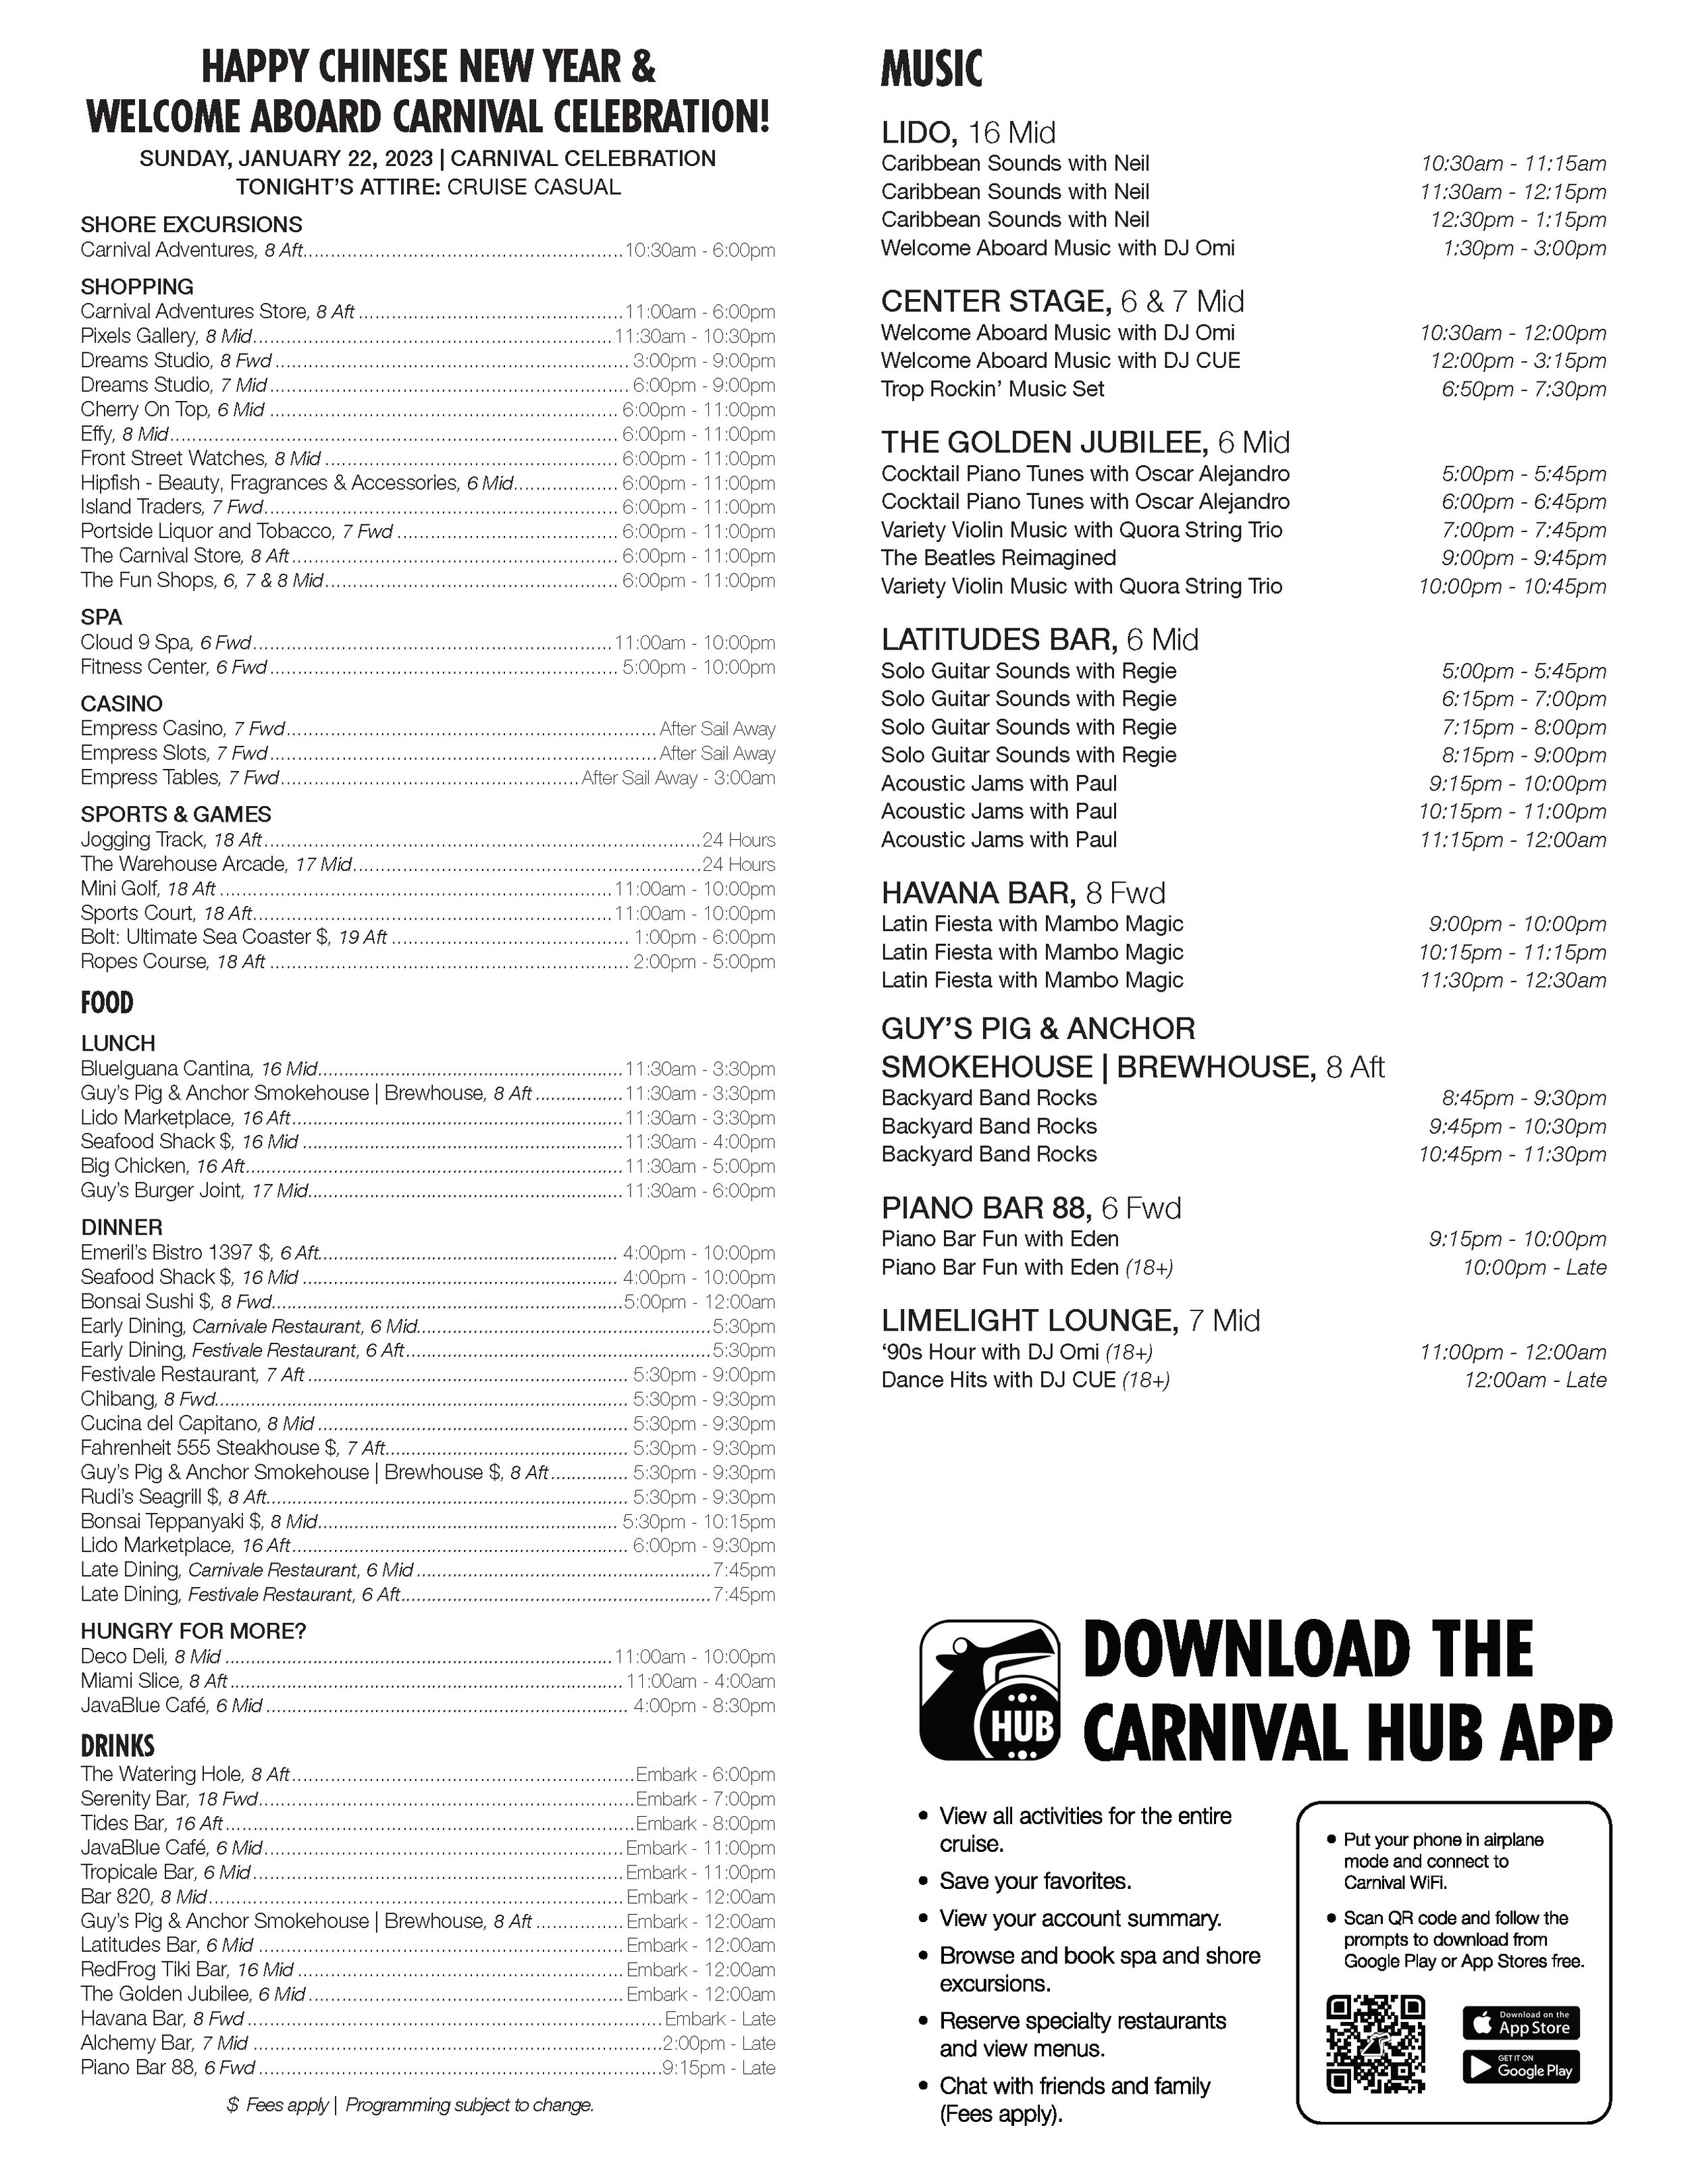 Carnival Celebration - January 22, 2023 -Embarkation - day 01_Page_2.jpg